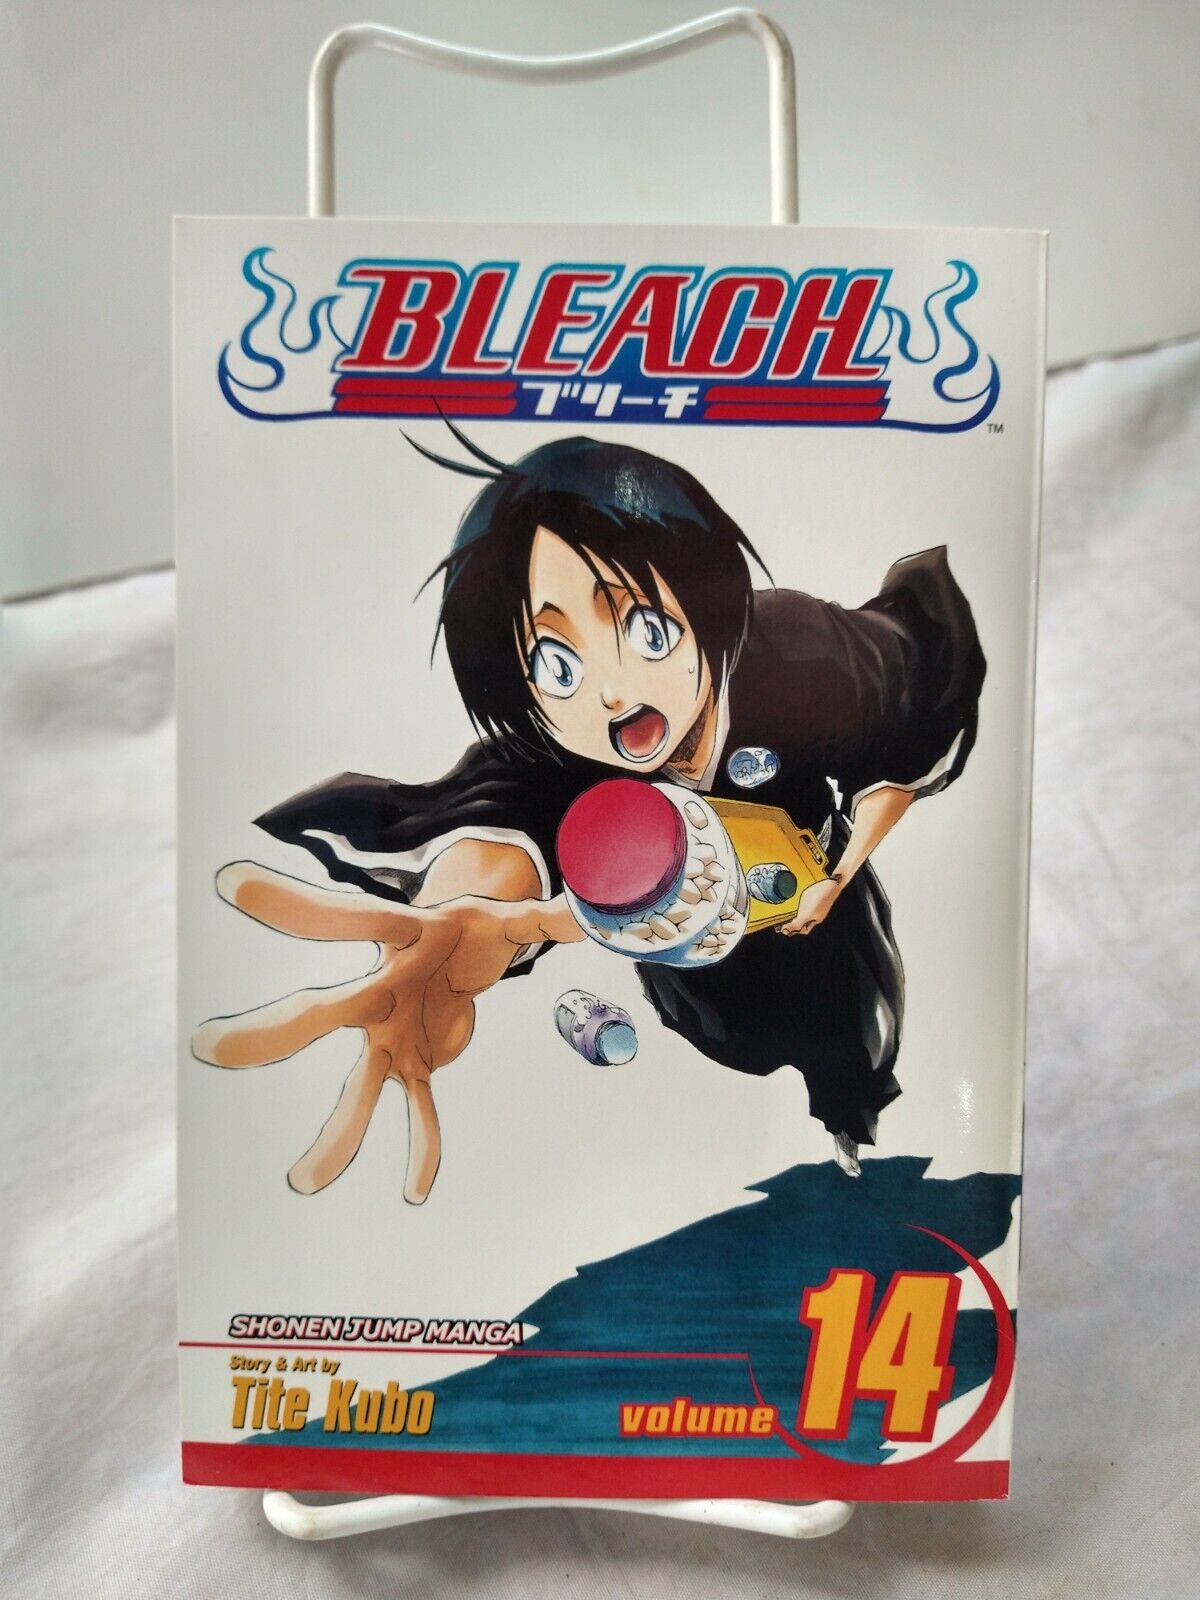 Bleach Volume 14 Paperback Tite Kubo Shonen Jump Manga